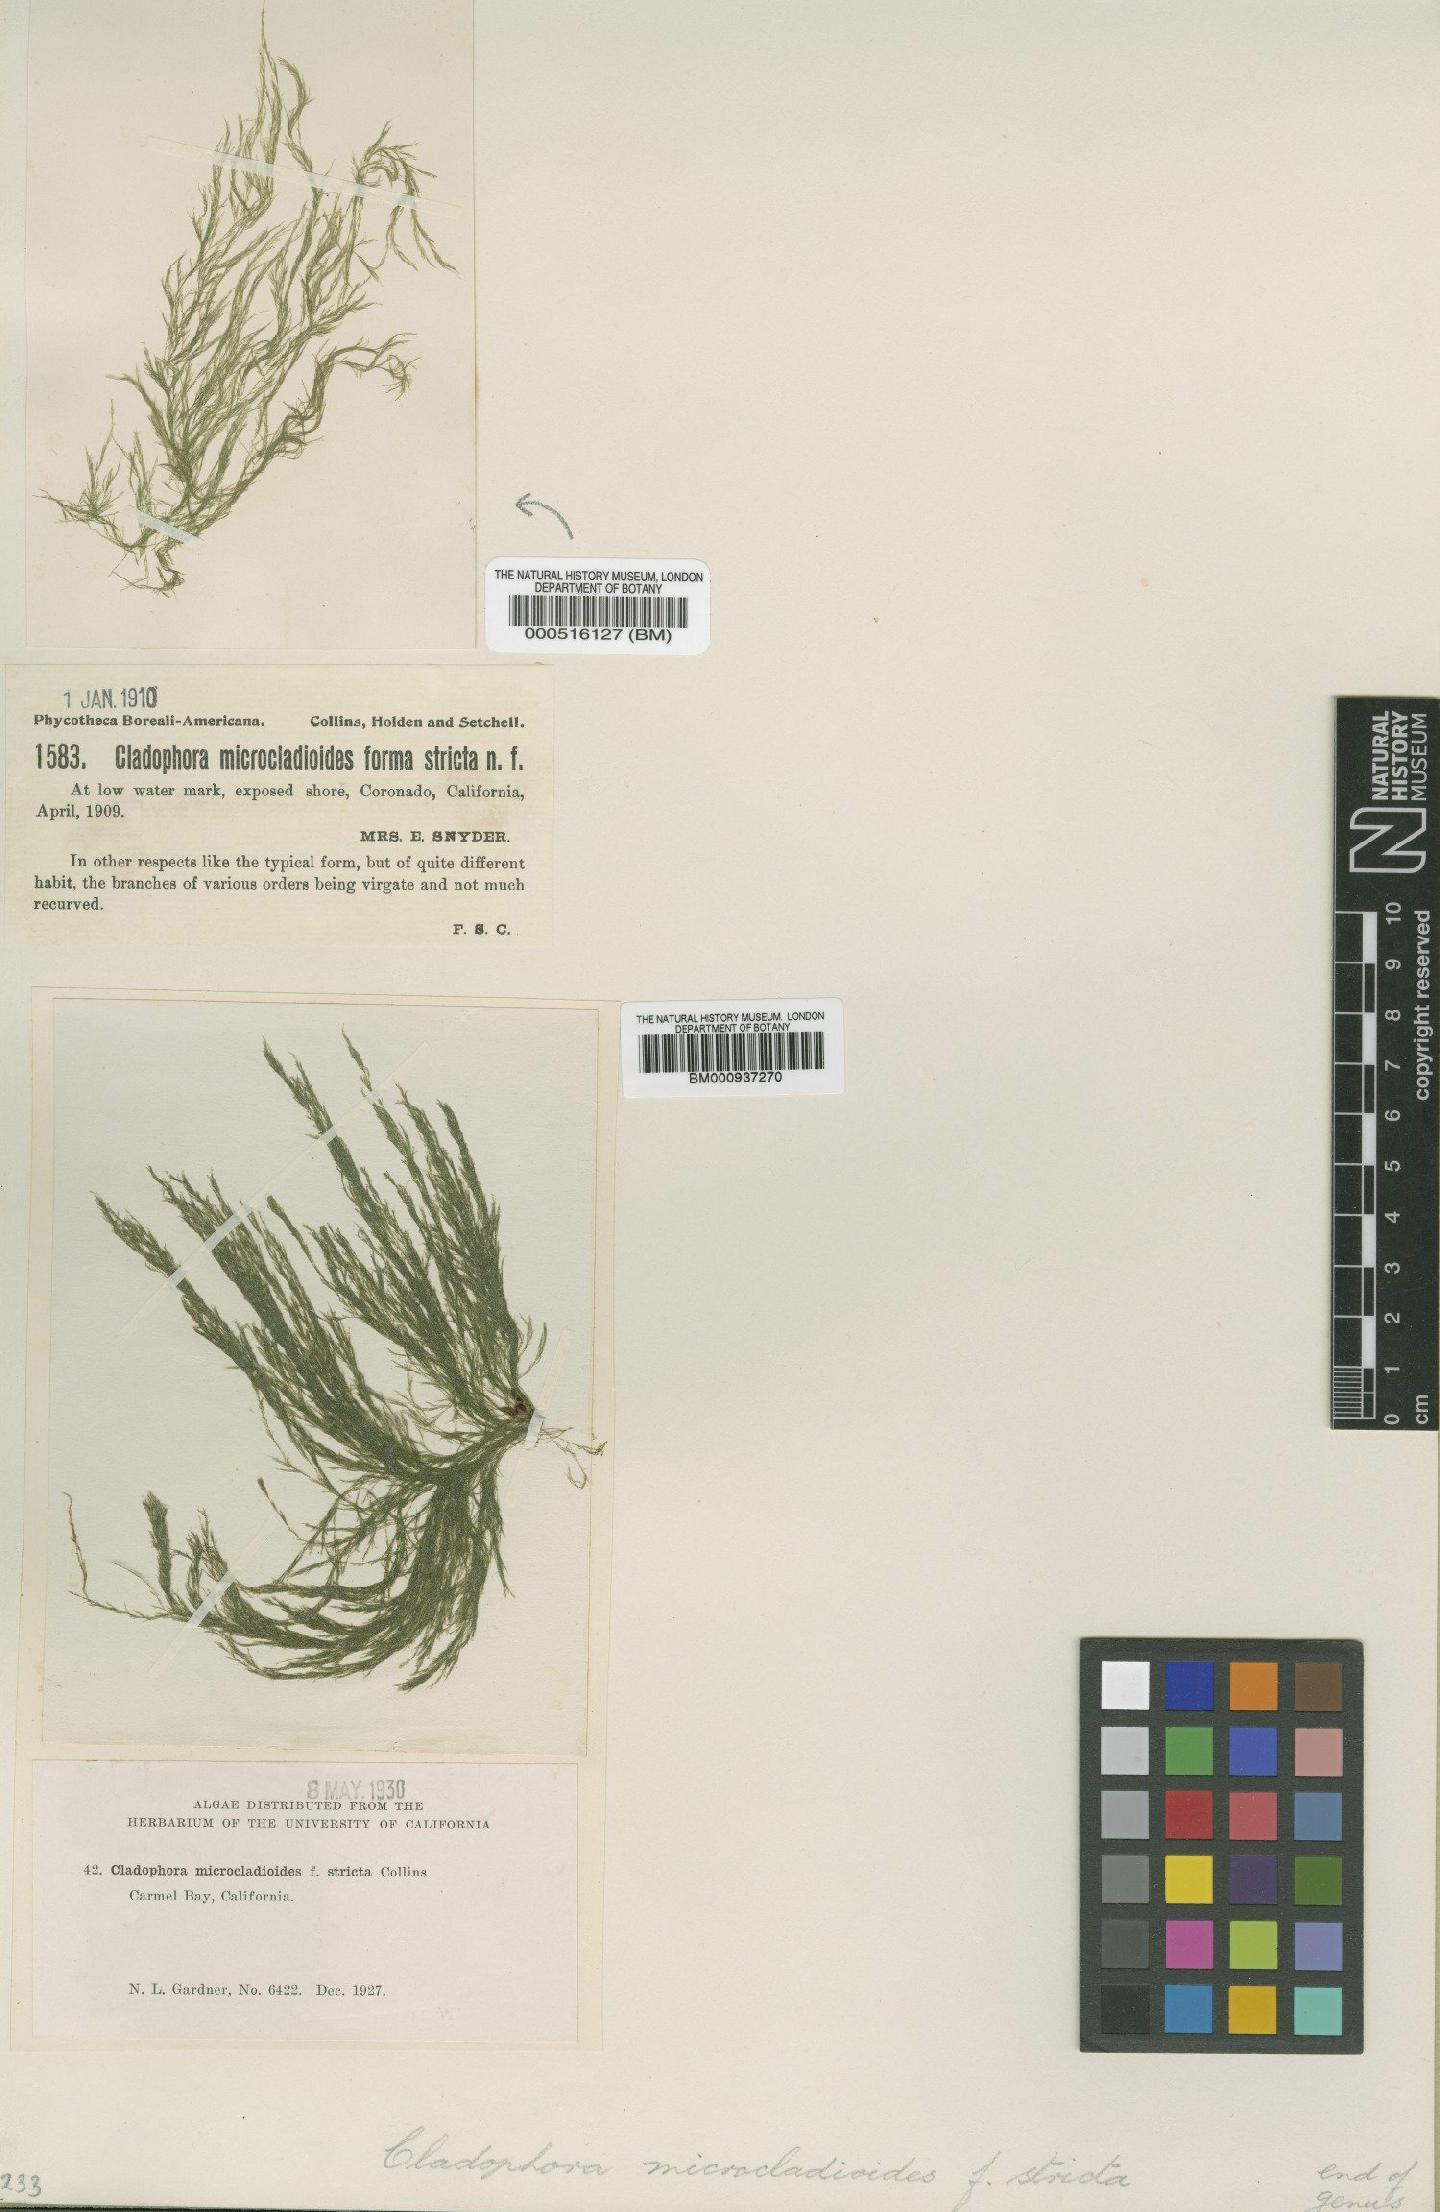 To NHMUK collection (Cladophora microcladioides f. stricta Collins; Syntype; NHMUK:ecatalogue:4830426)